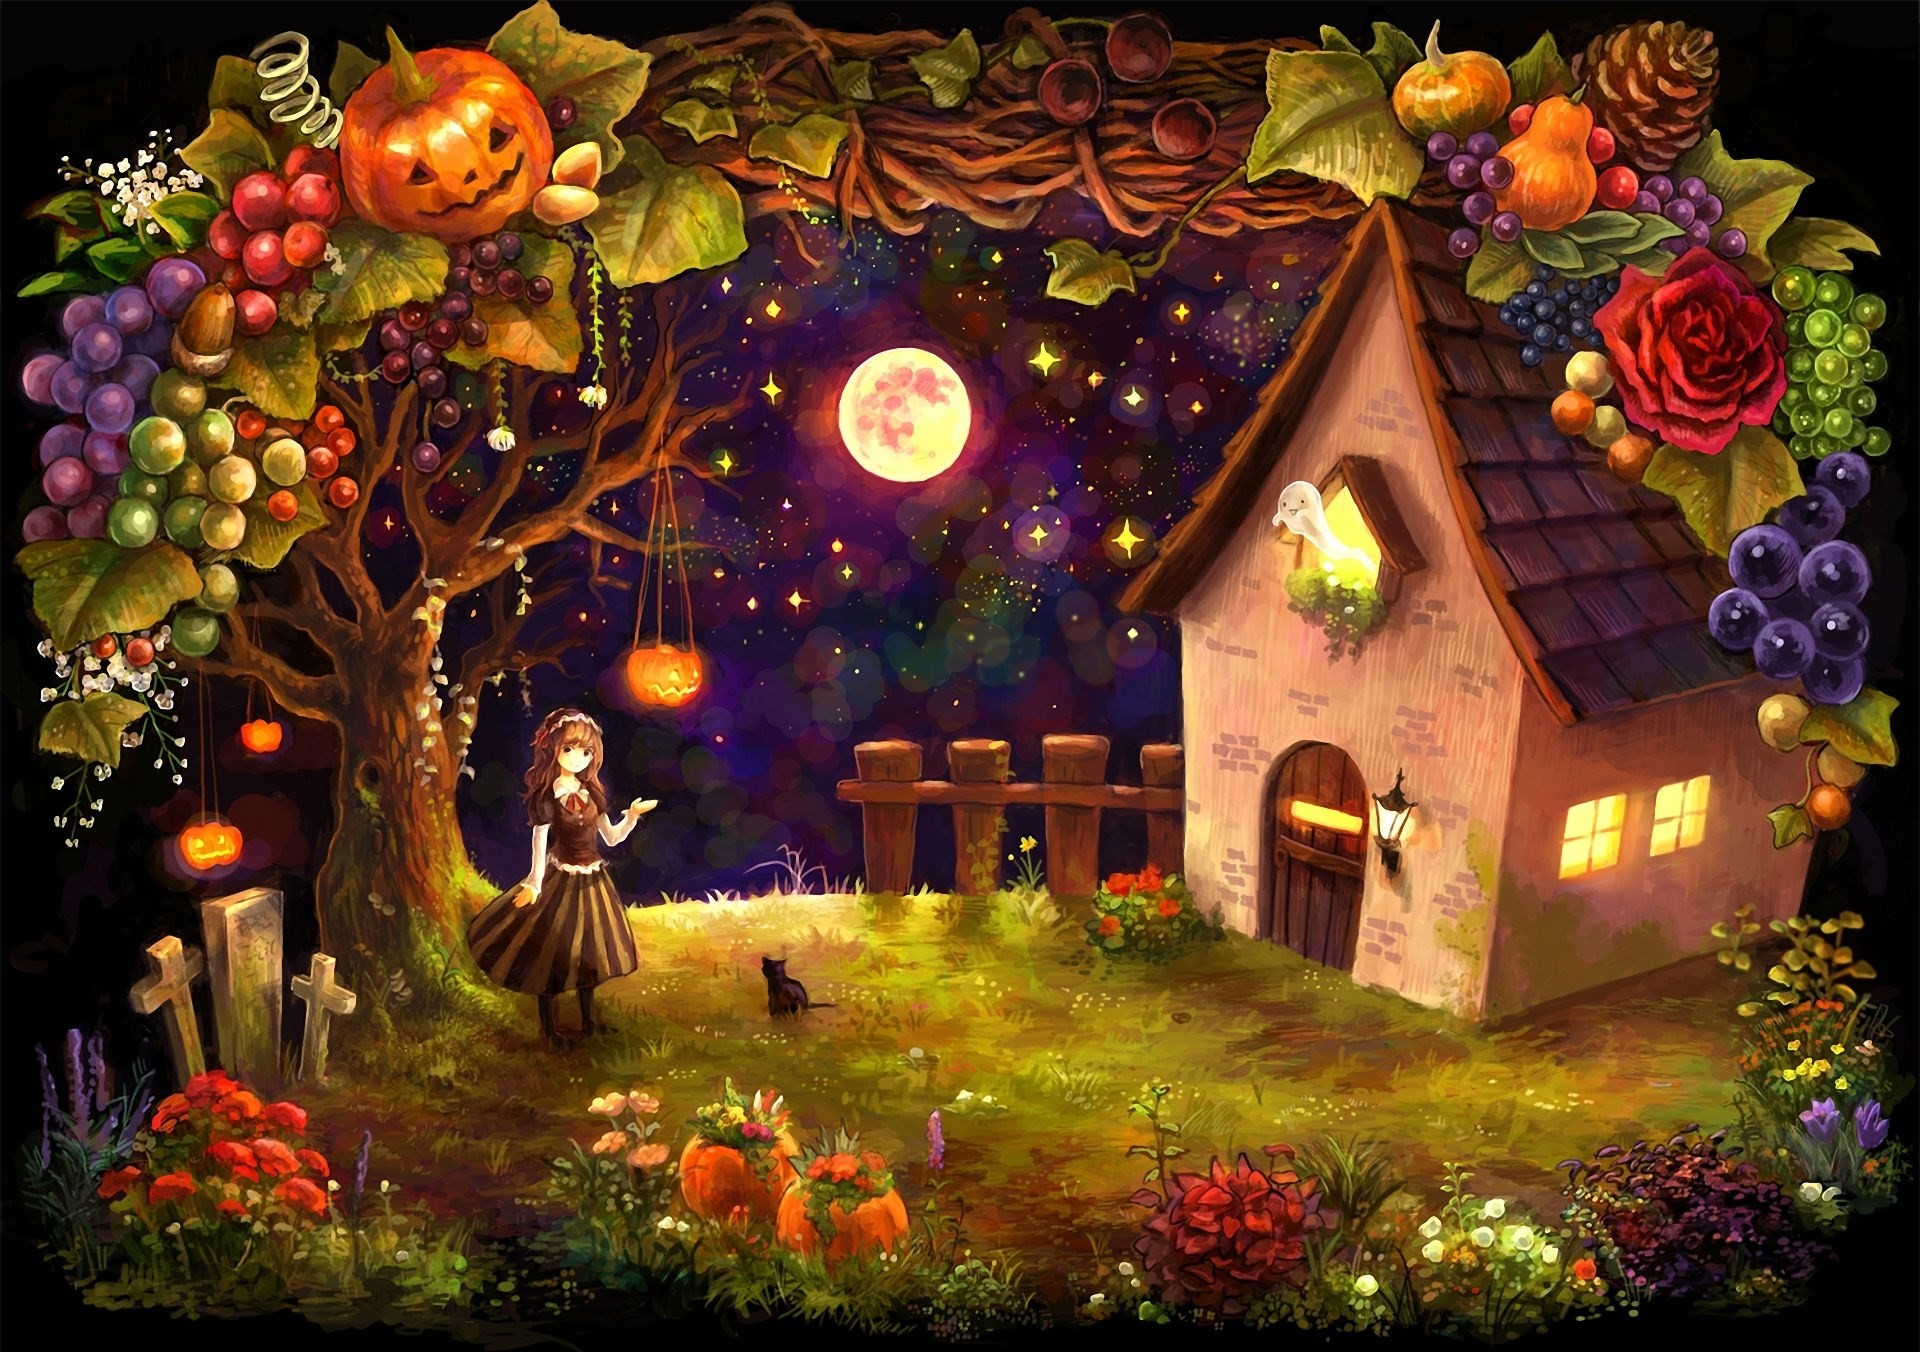 Live Halloween Wallpaper for Desktop 62 images 